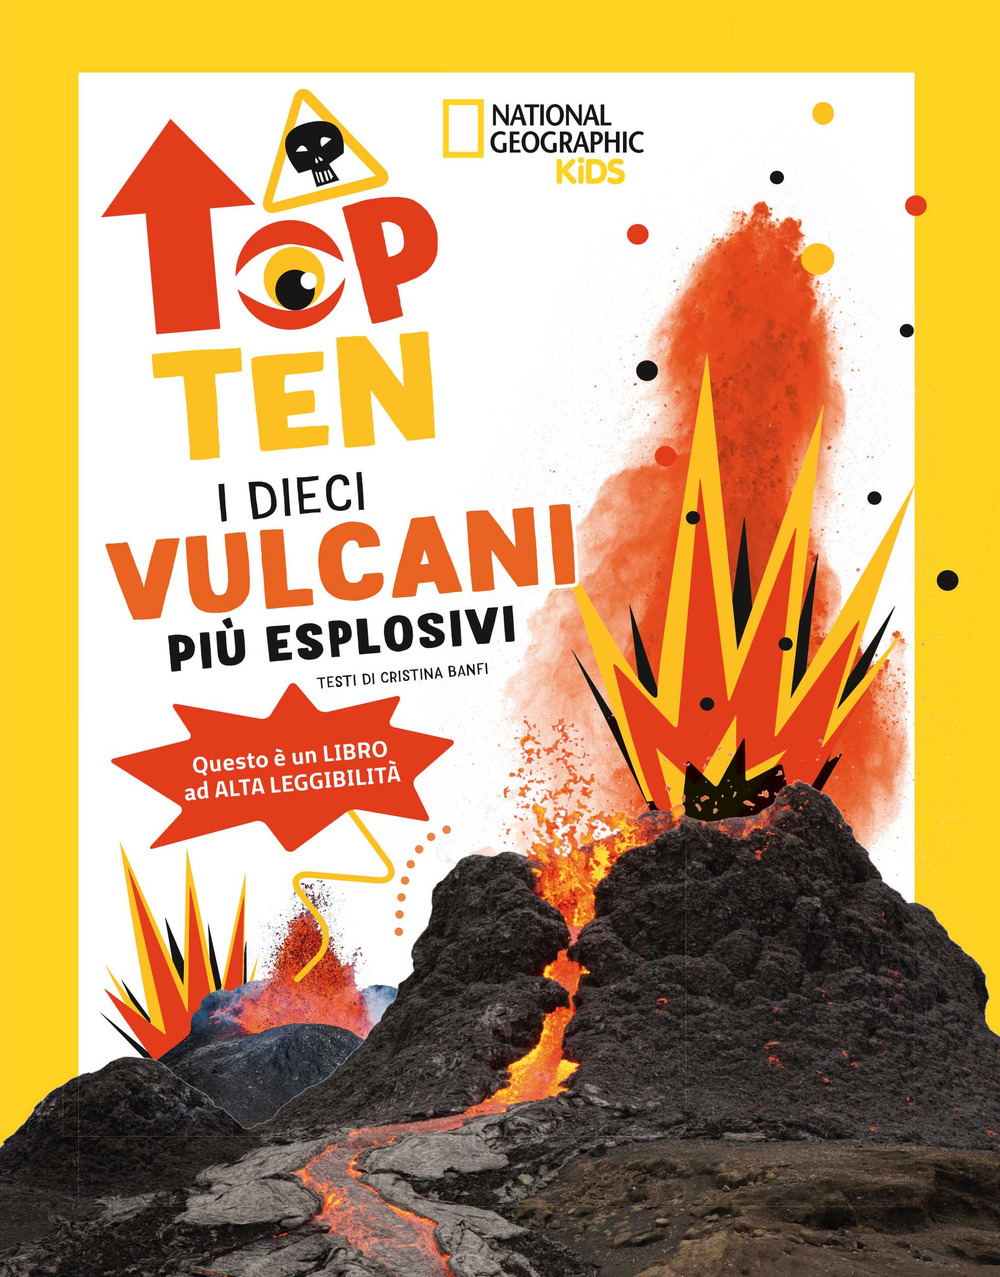 I dieci vulcani più esplosivi. Top ten. Ediz. ad alta leggibilità